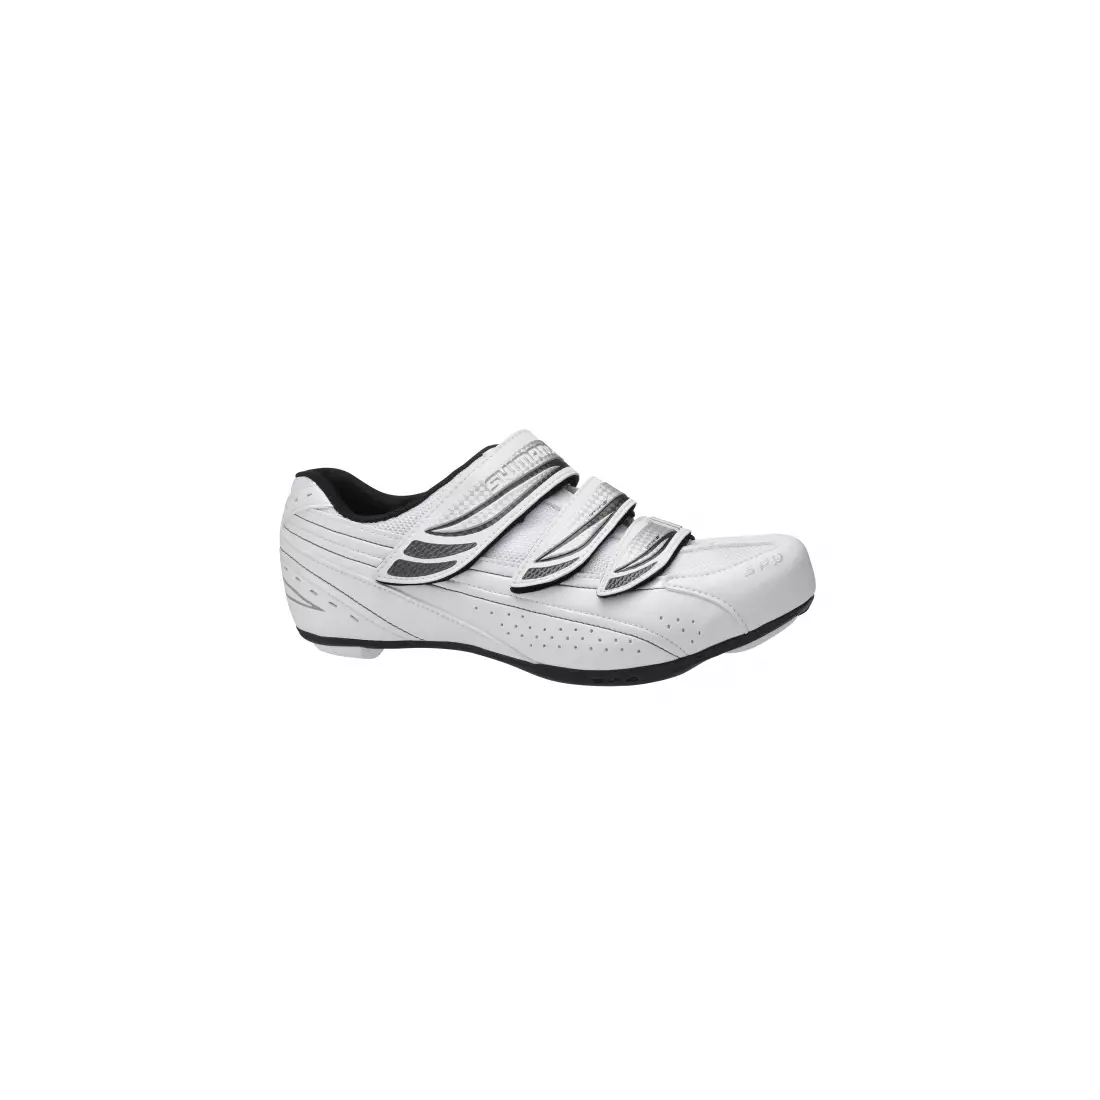 SHIMANO SH-WR35 - pantofi rutier dama, culoare: alb